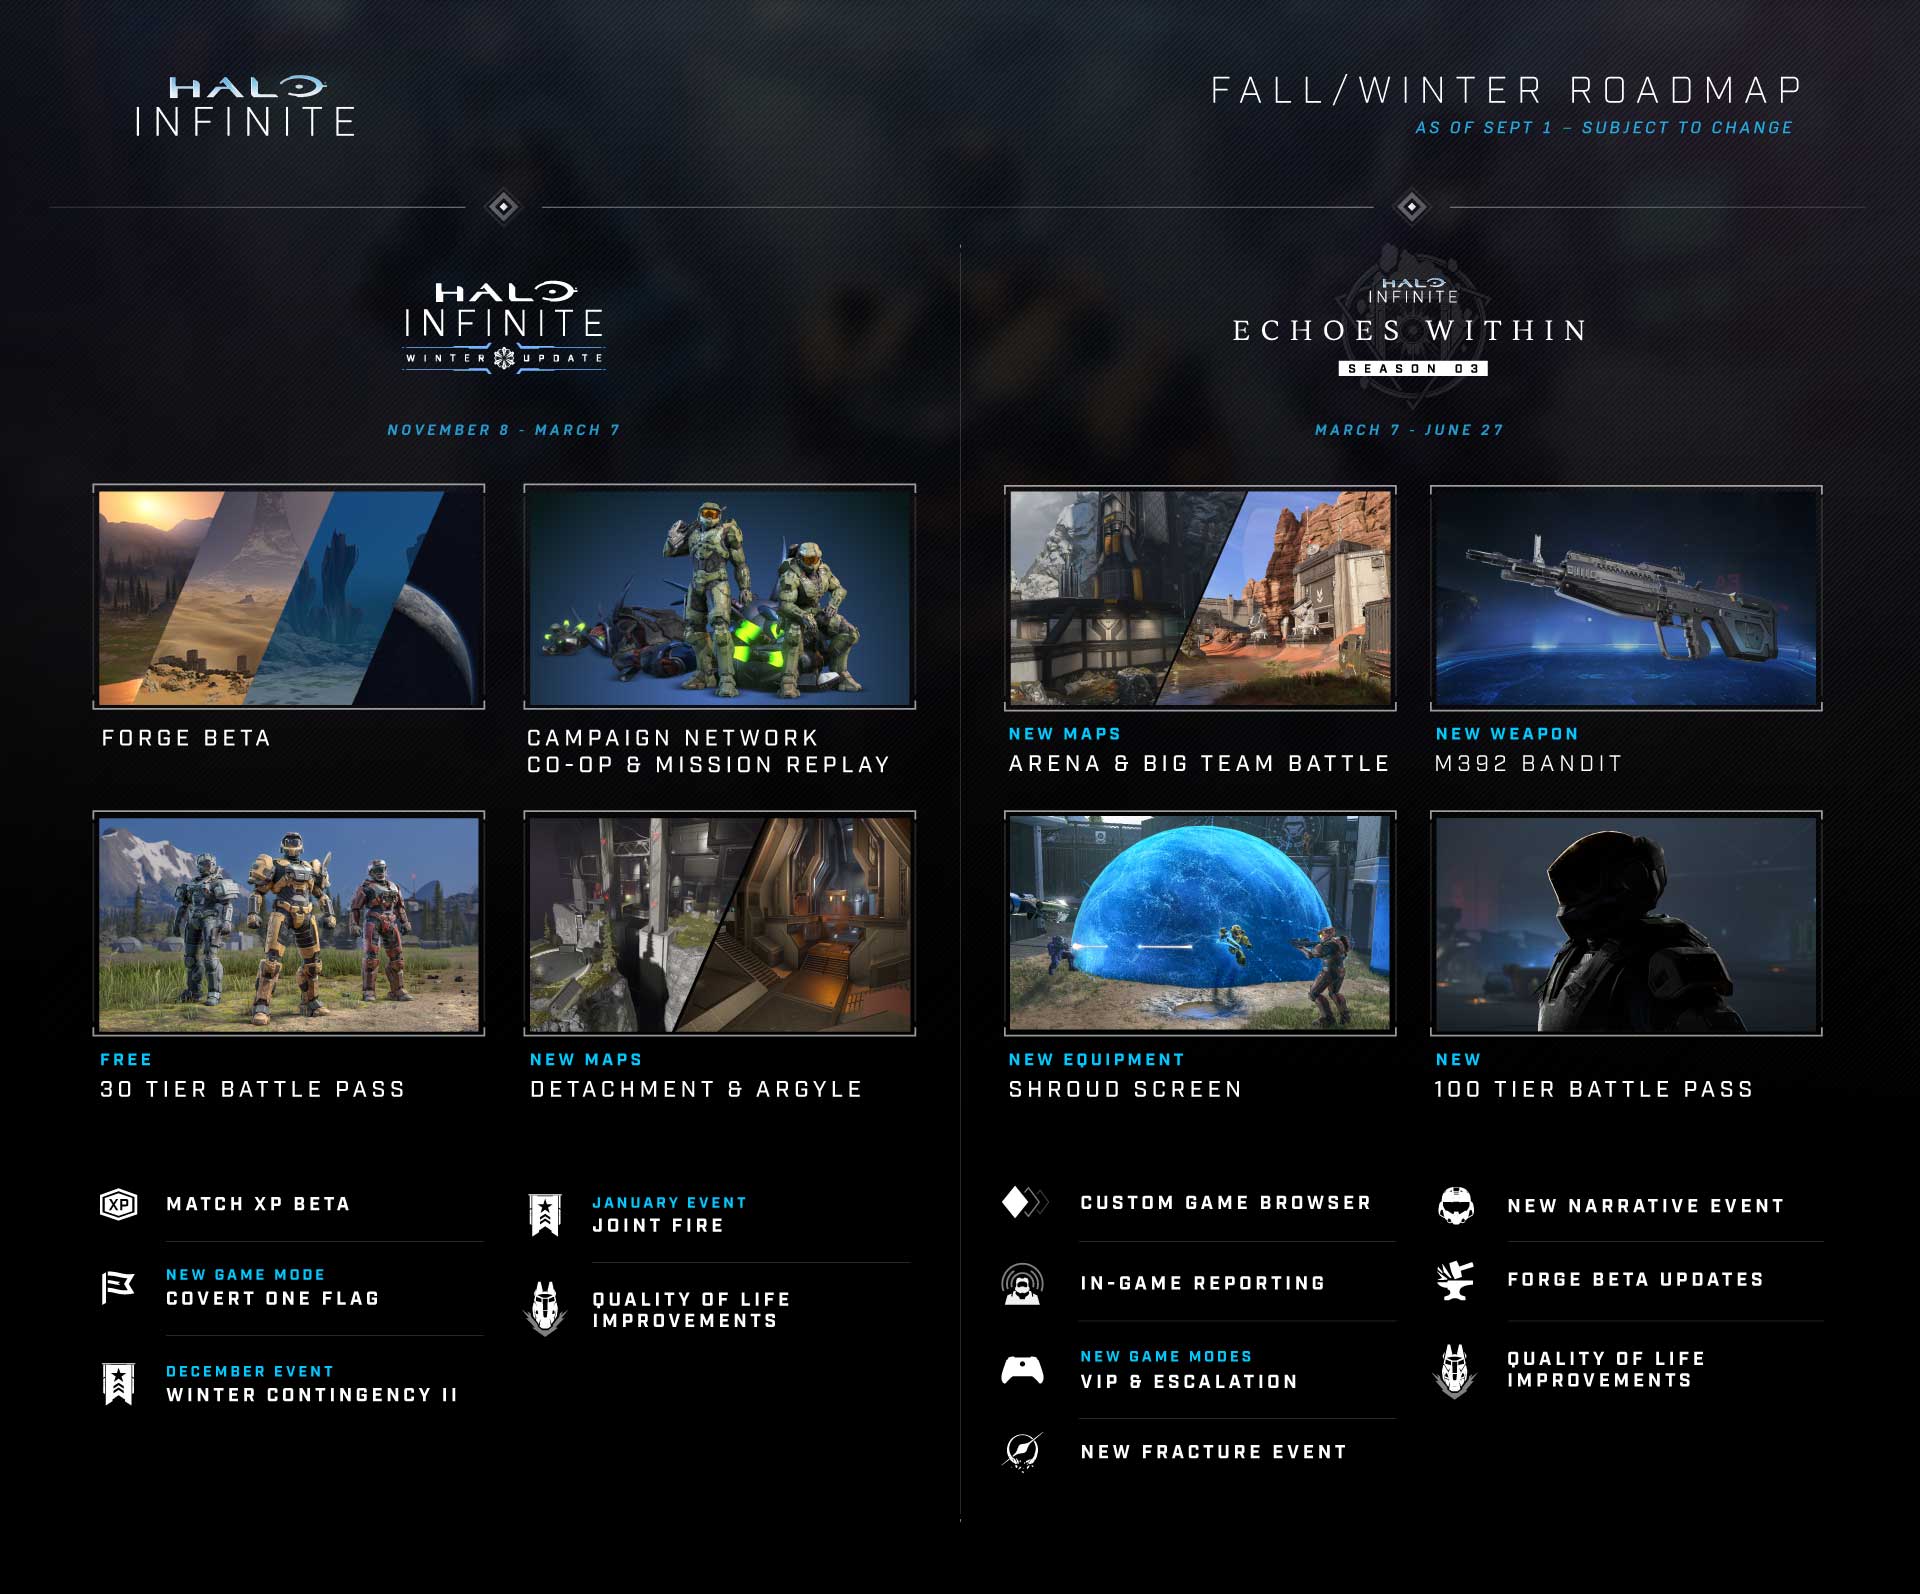 Halo Infinite SplitScreen CoOp Is Canceled, Mode Coming Soon